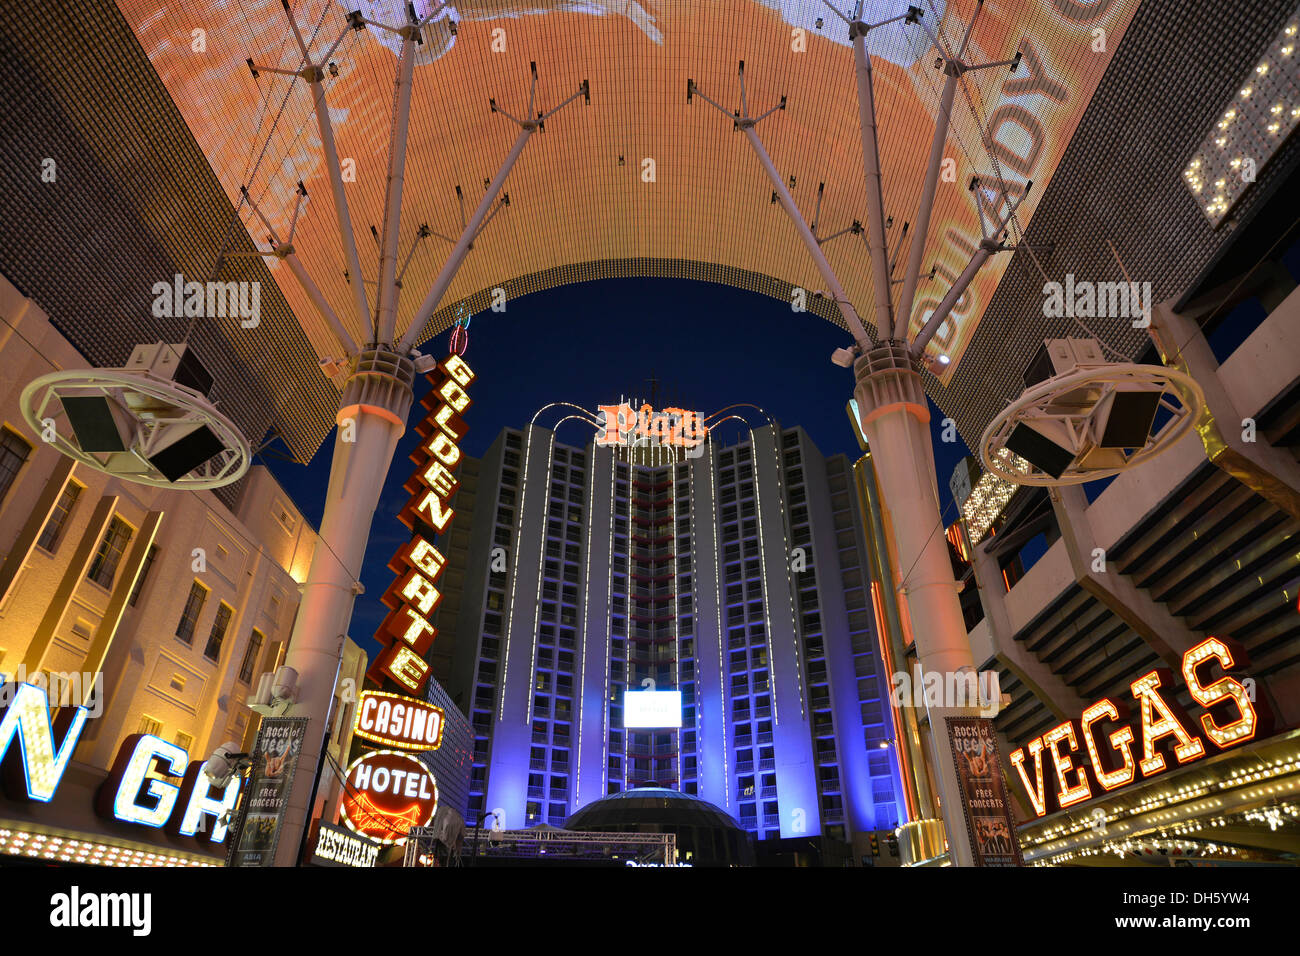 Plaza Hotel Casino, Las Vegas Club Casino, Fremont Street Experience, en el centro de Old Las Vegas, Las Vegas, Nevada. Foto de stock